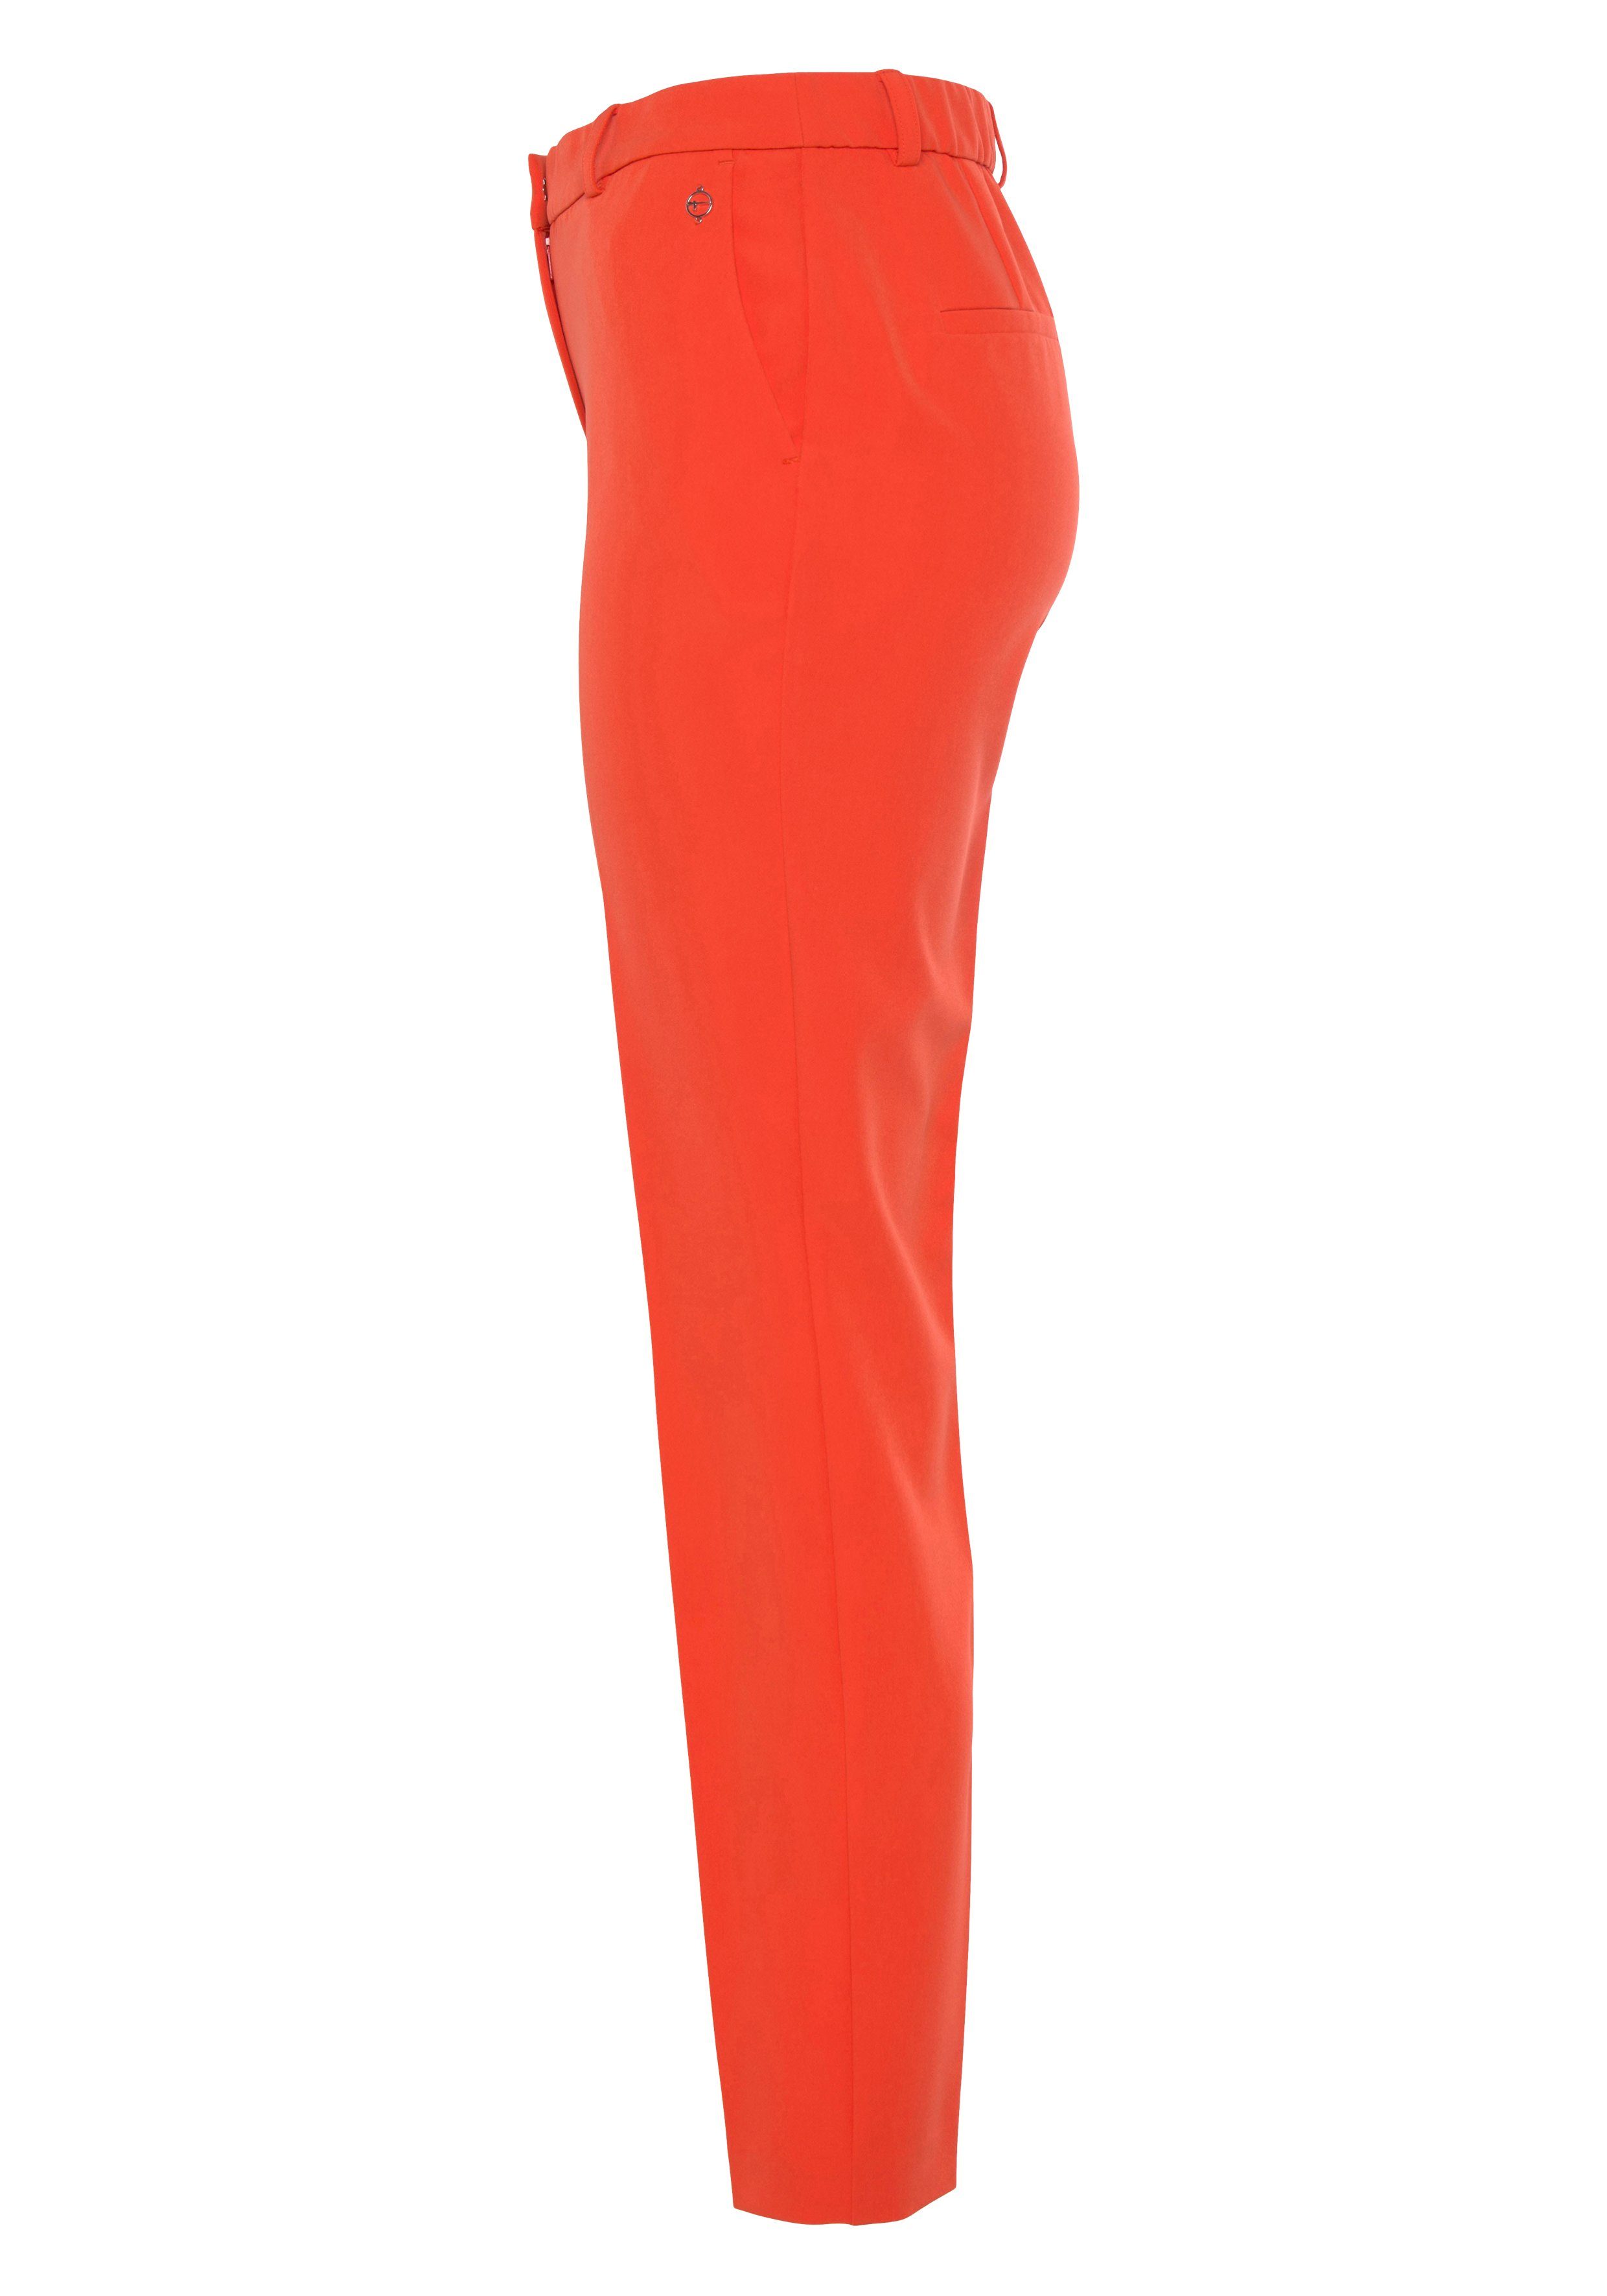 Tamaris Anzughose in Trendfarben orange (Hose Material) aus nachhaltigem